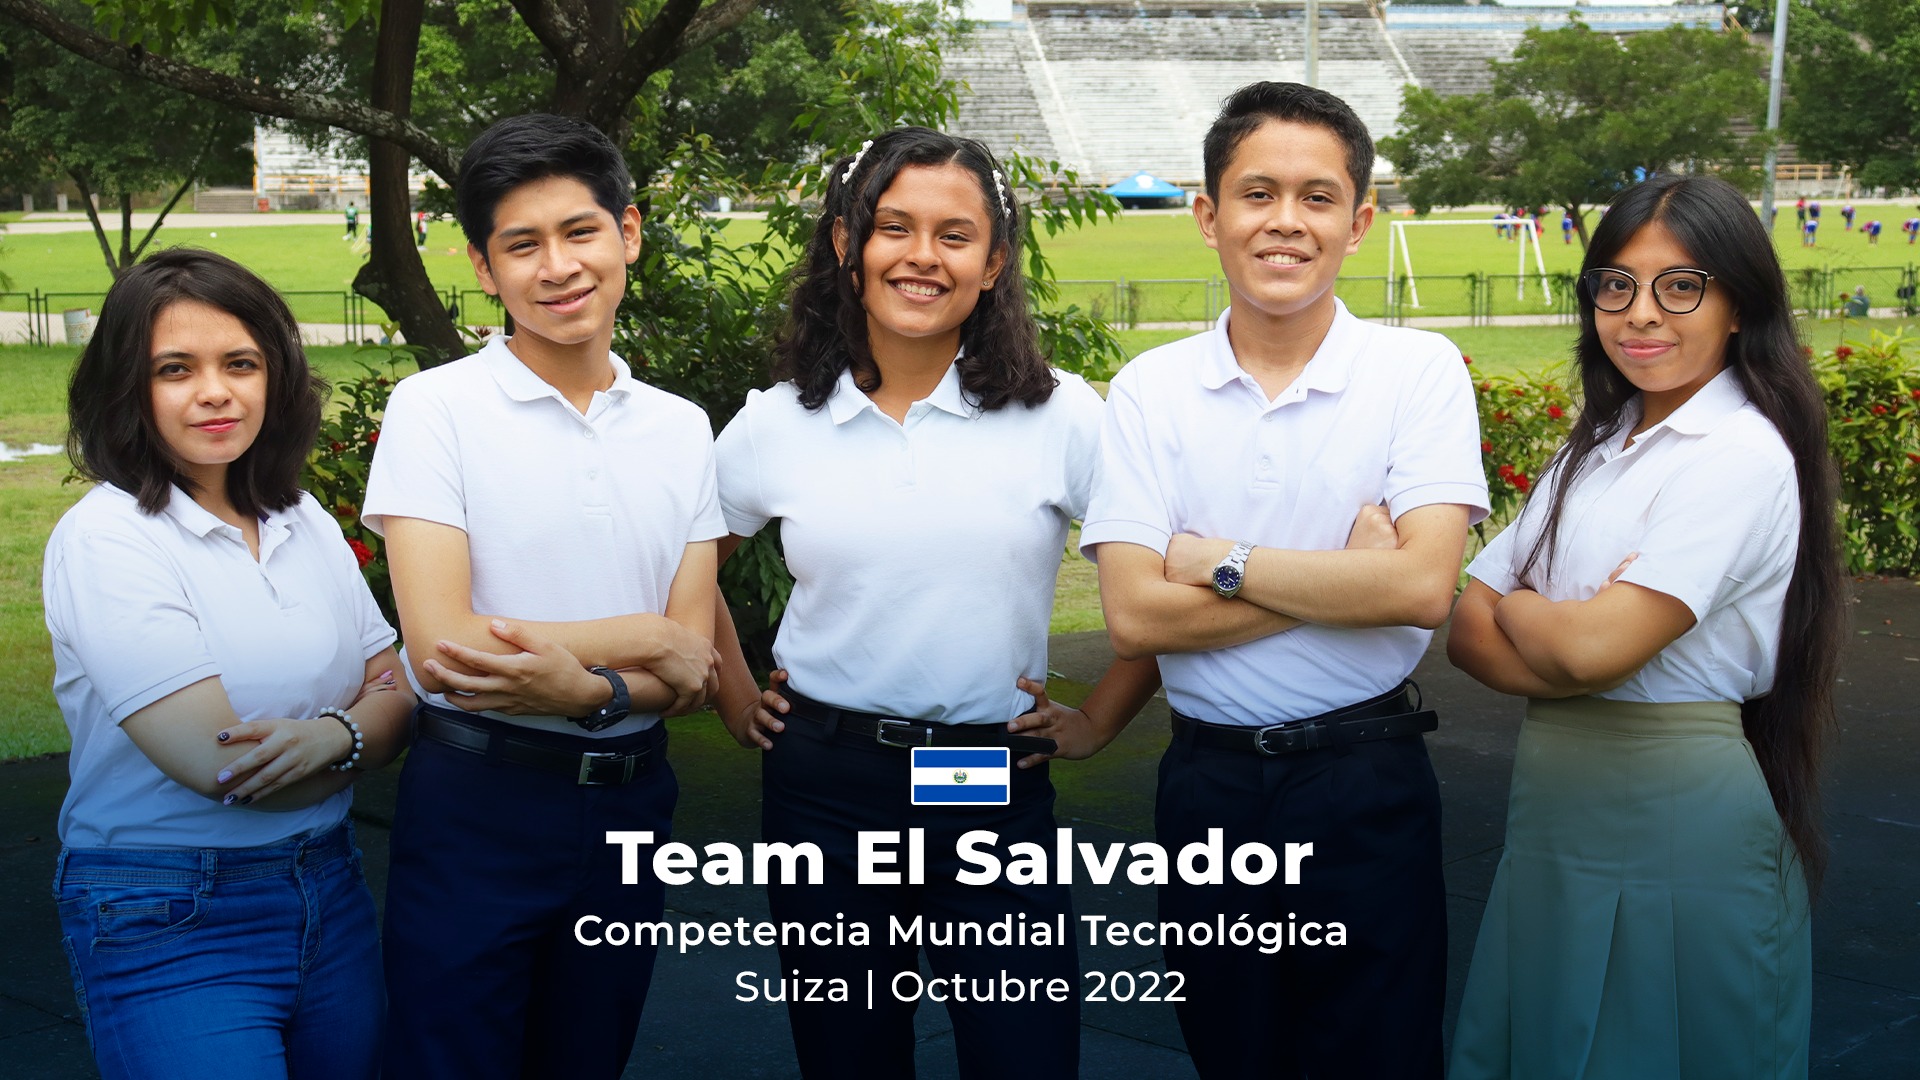 Orgullo salvadoreño - Team El Salvador, alumnos salvadoreños que representaron al país en Suiza, gracias a FUSALMO